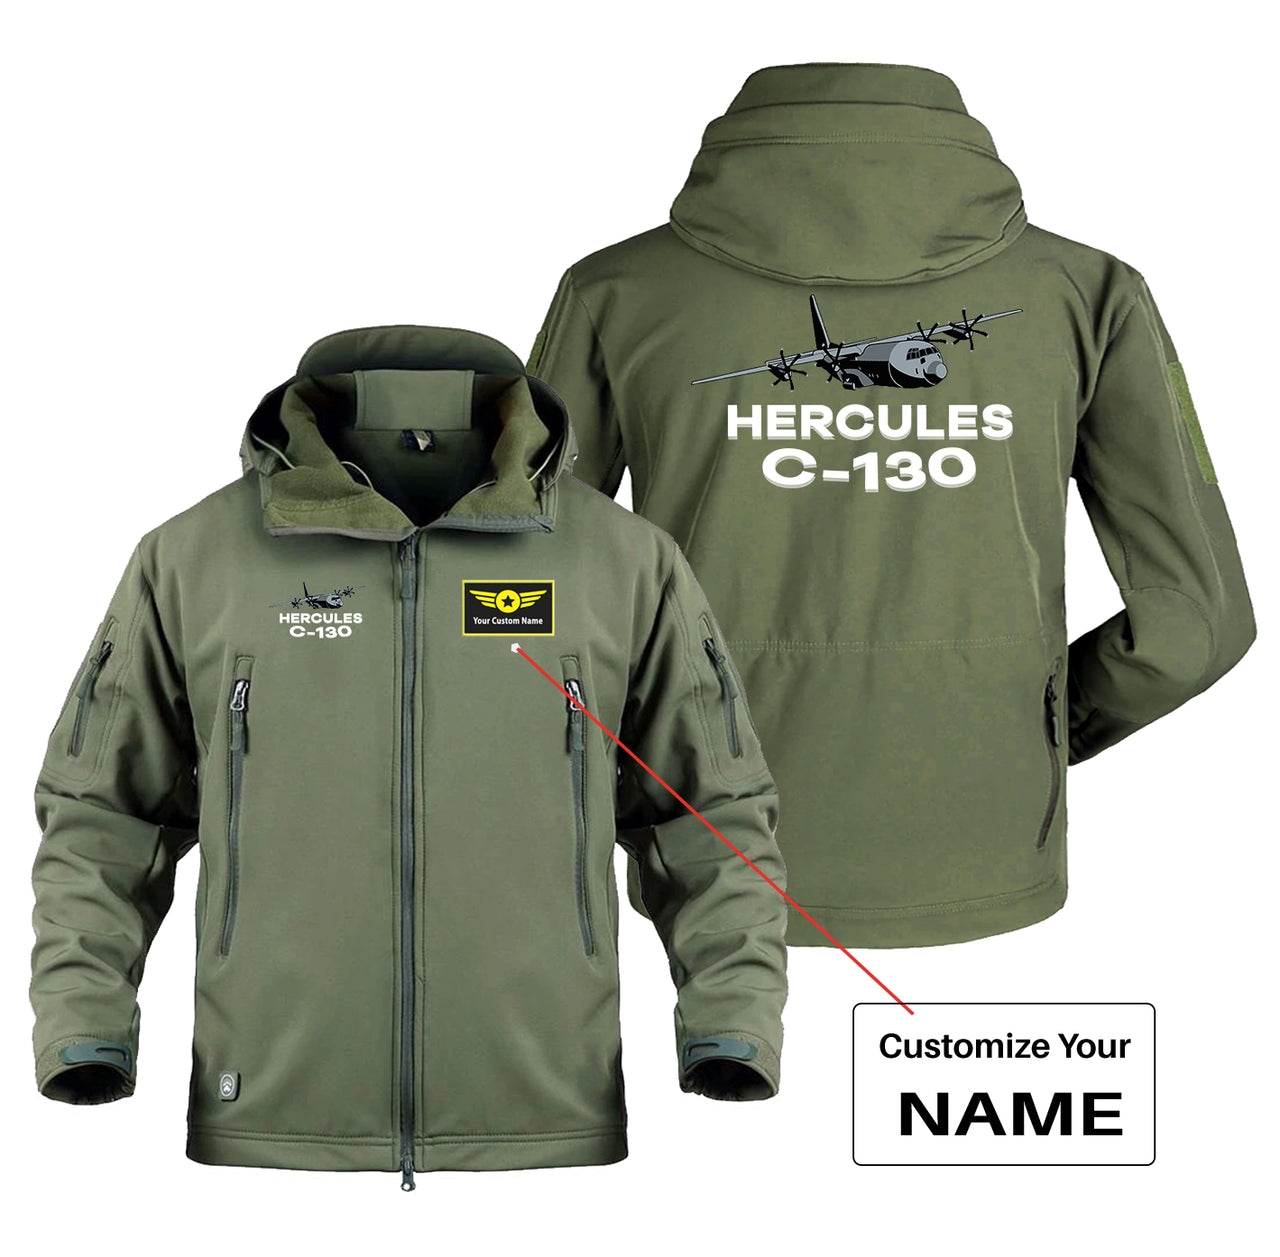 The Hercules C130 Designed Military Jackets (Customizable)